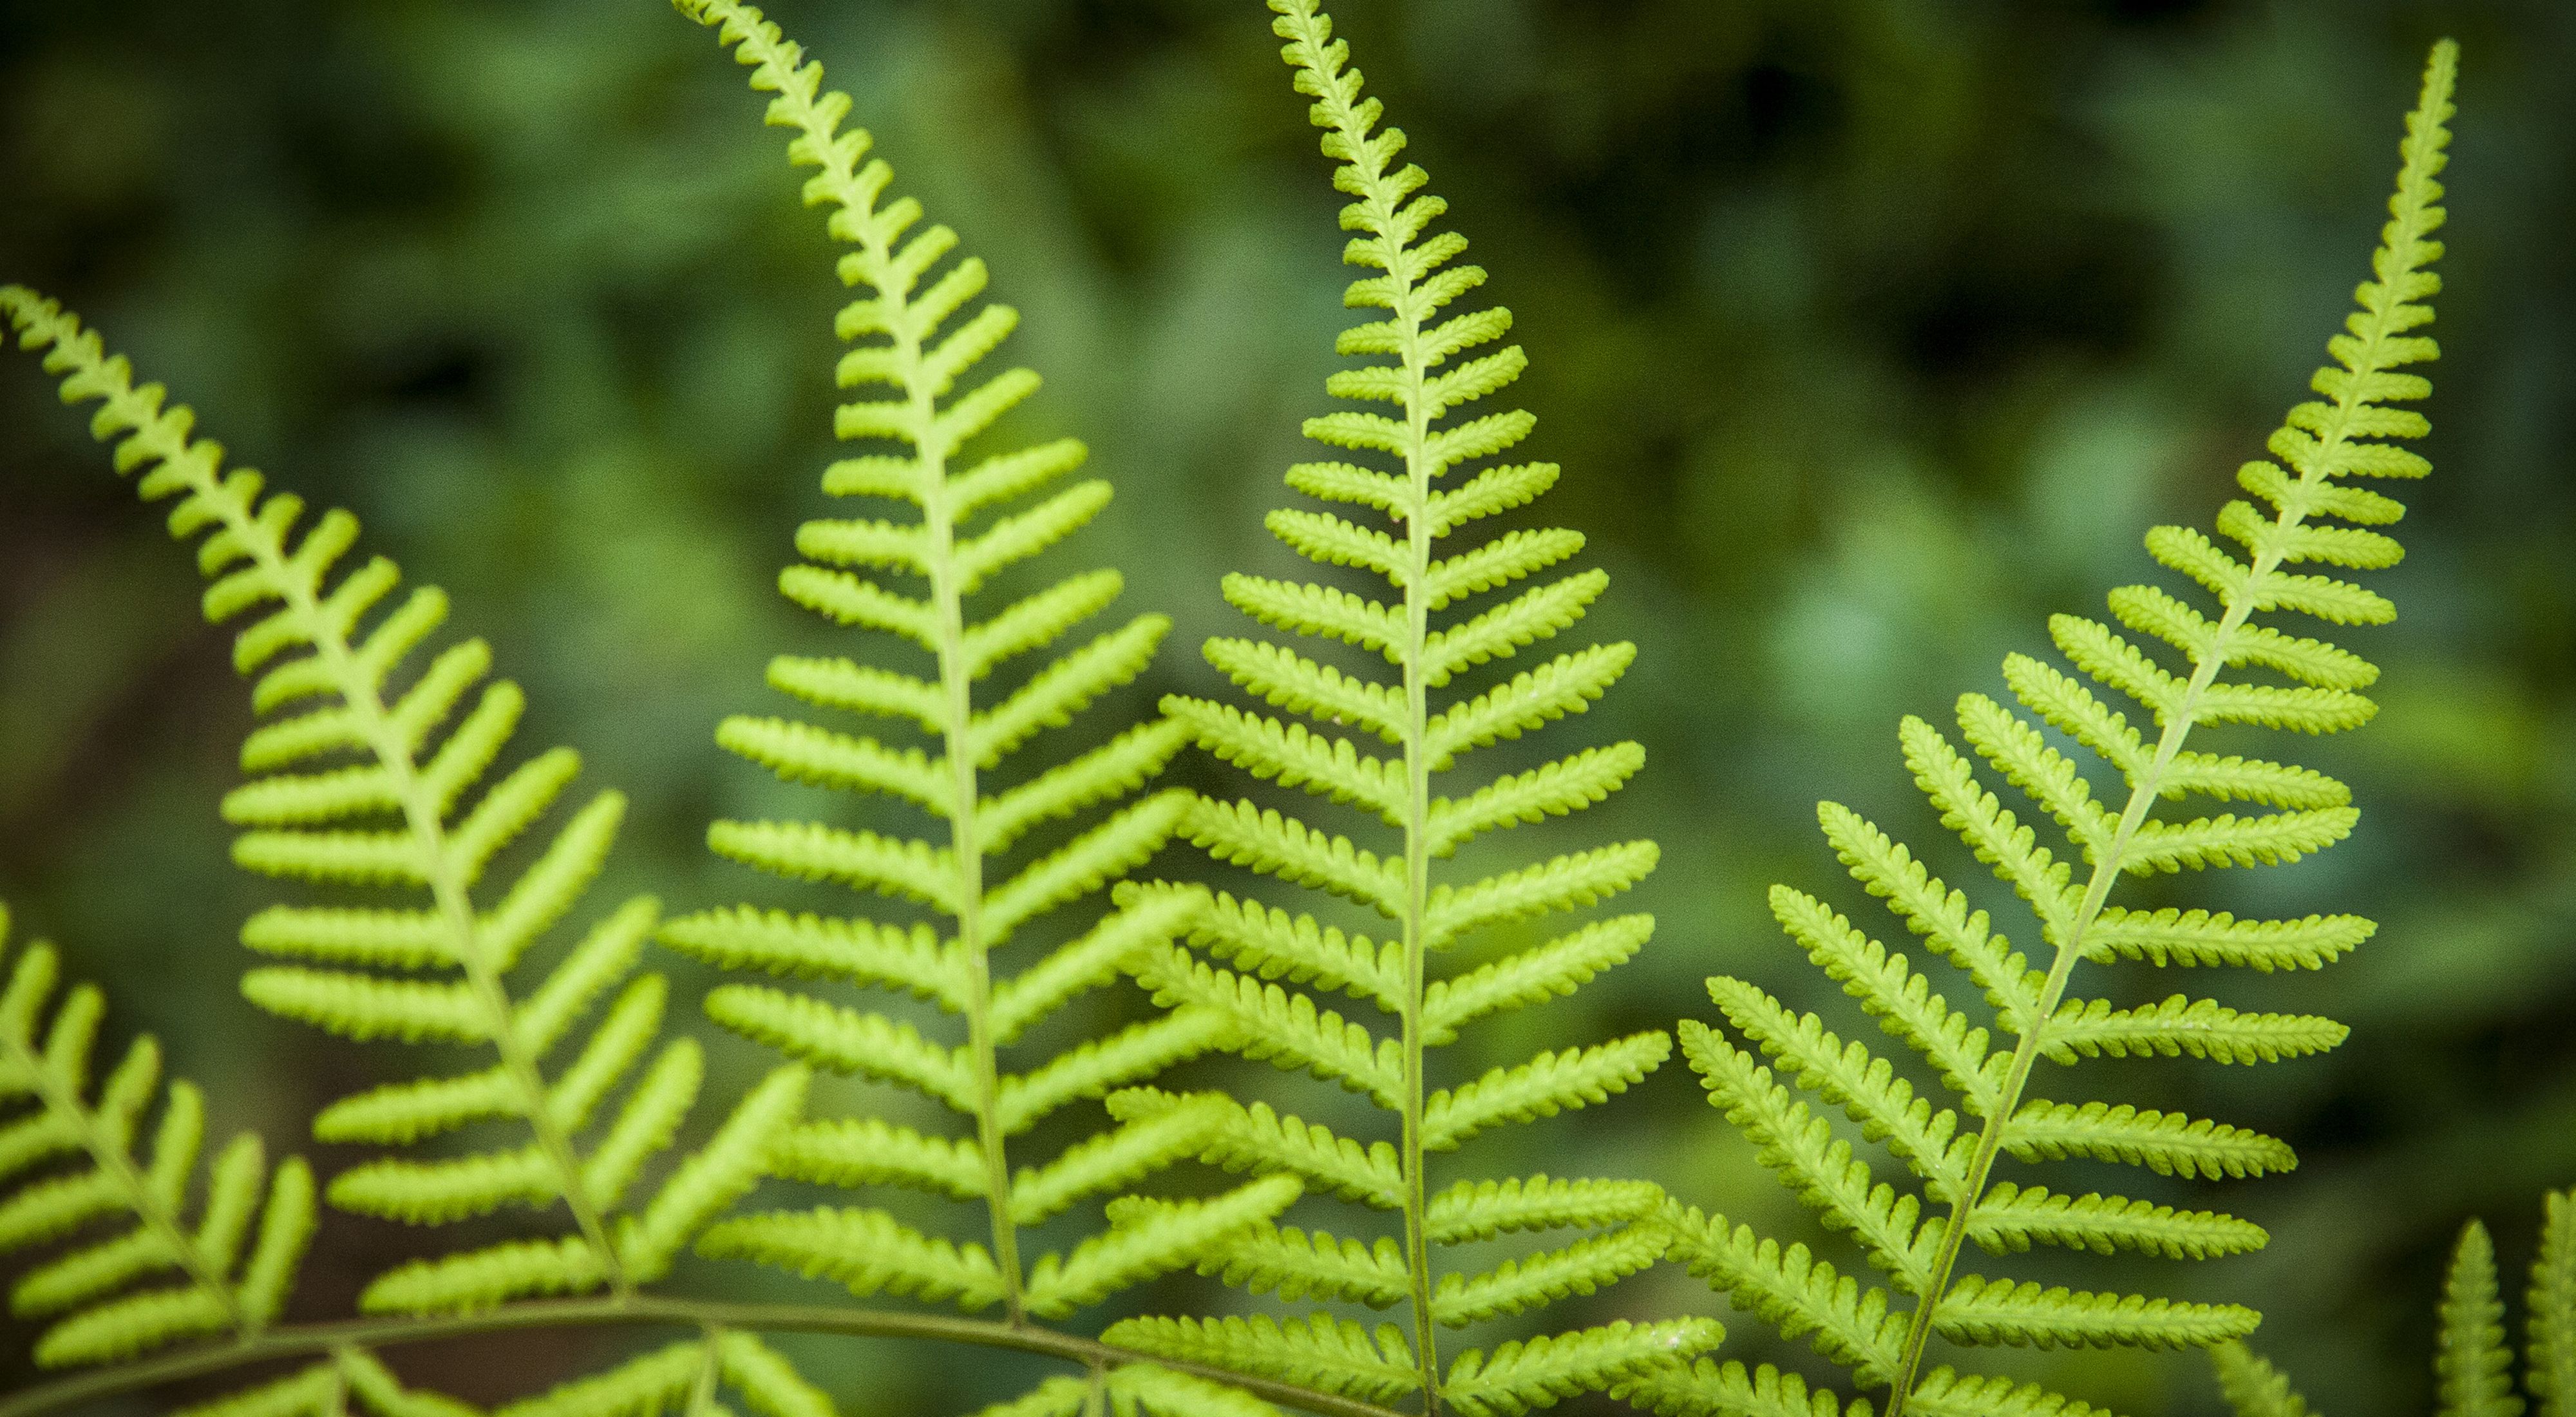 Close up detail of a fern